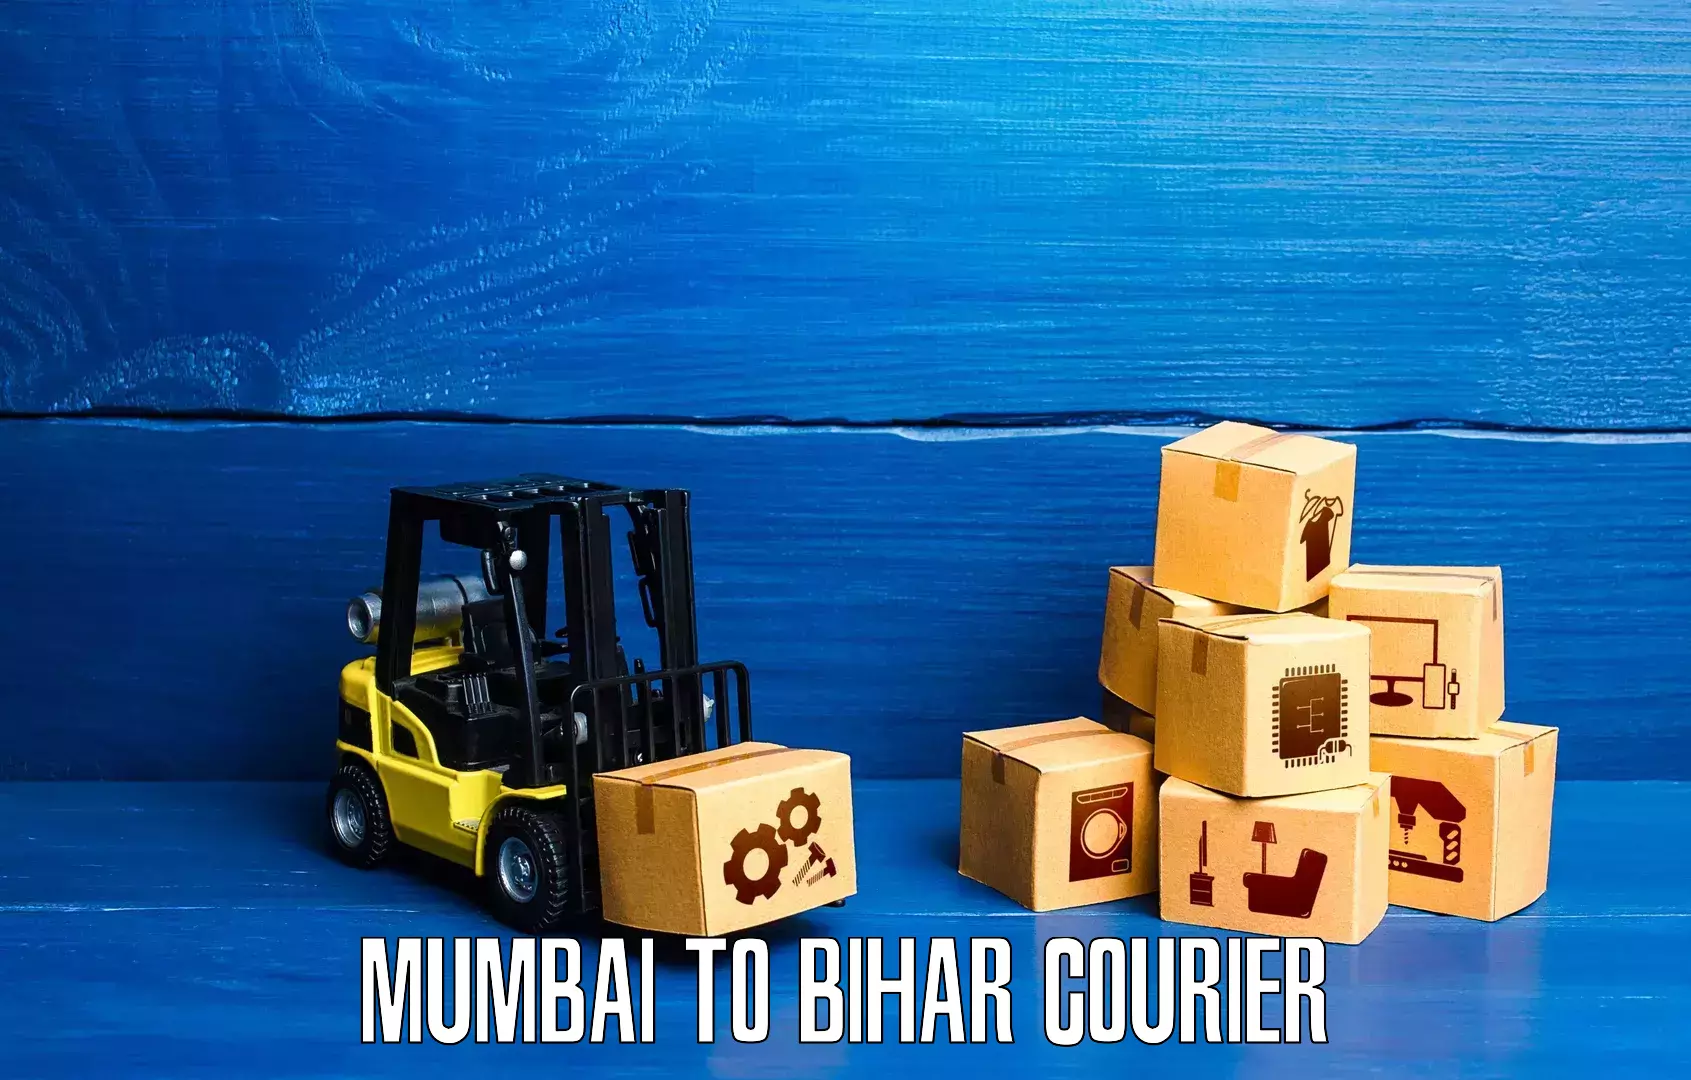 Courier service booking Mumbai to Dhaka